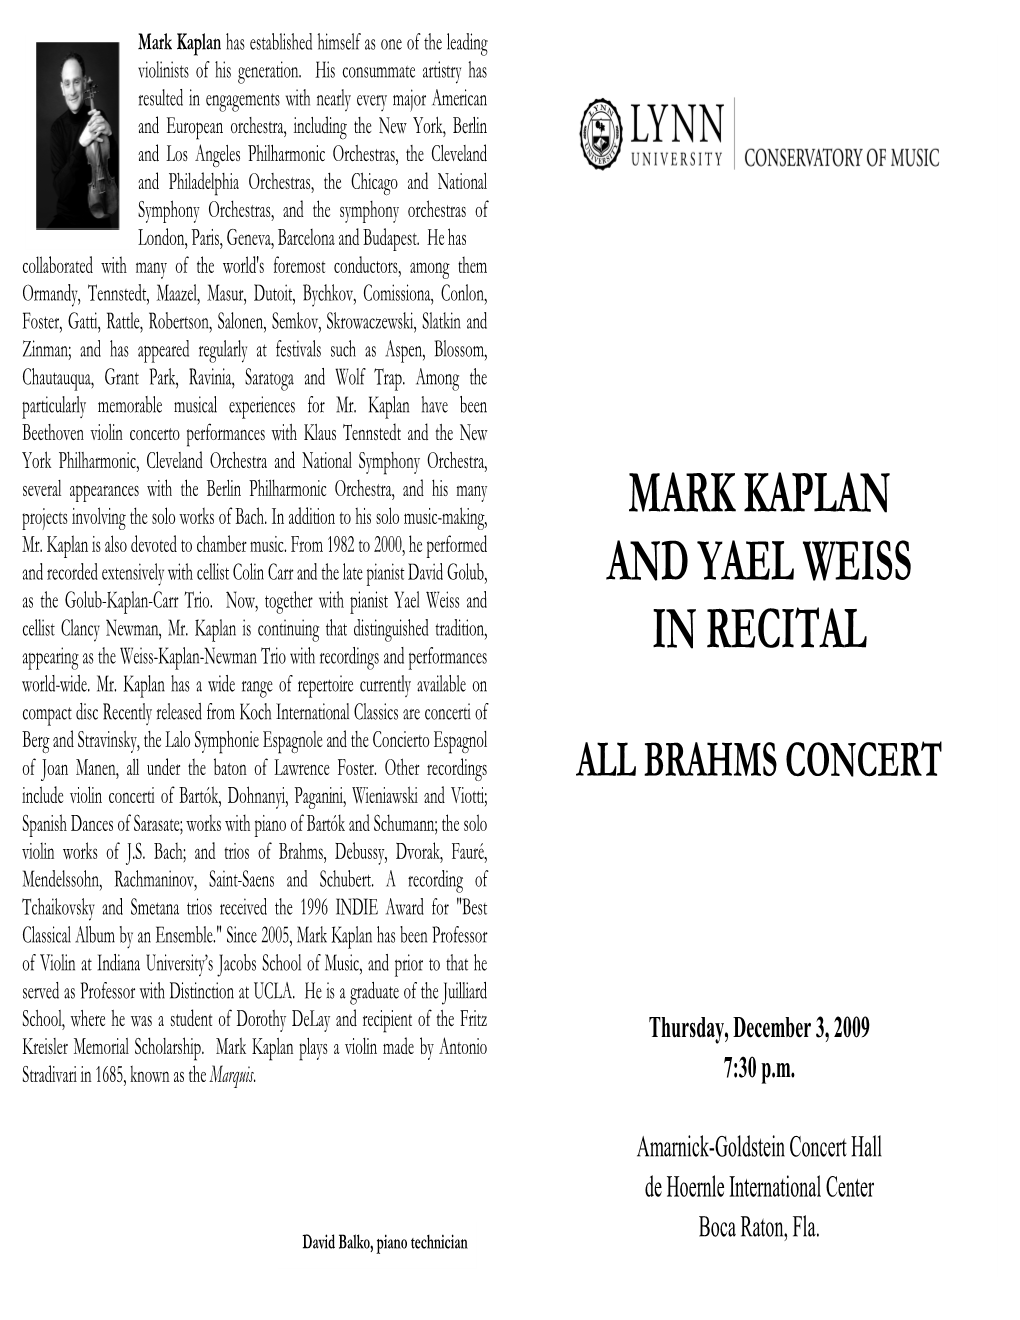 2009-2010 Mark Kaplan and Yael Weiss in Recital: All Brahms Concert